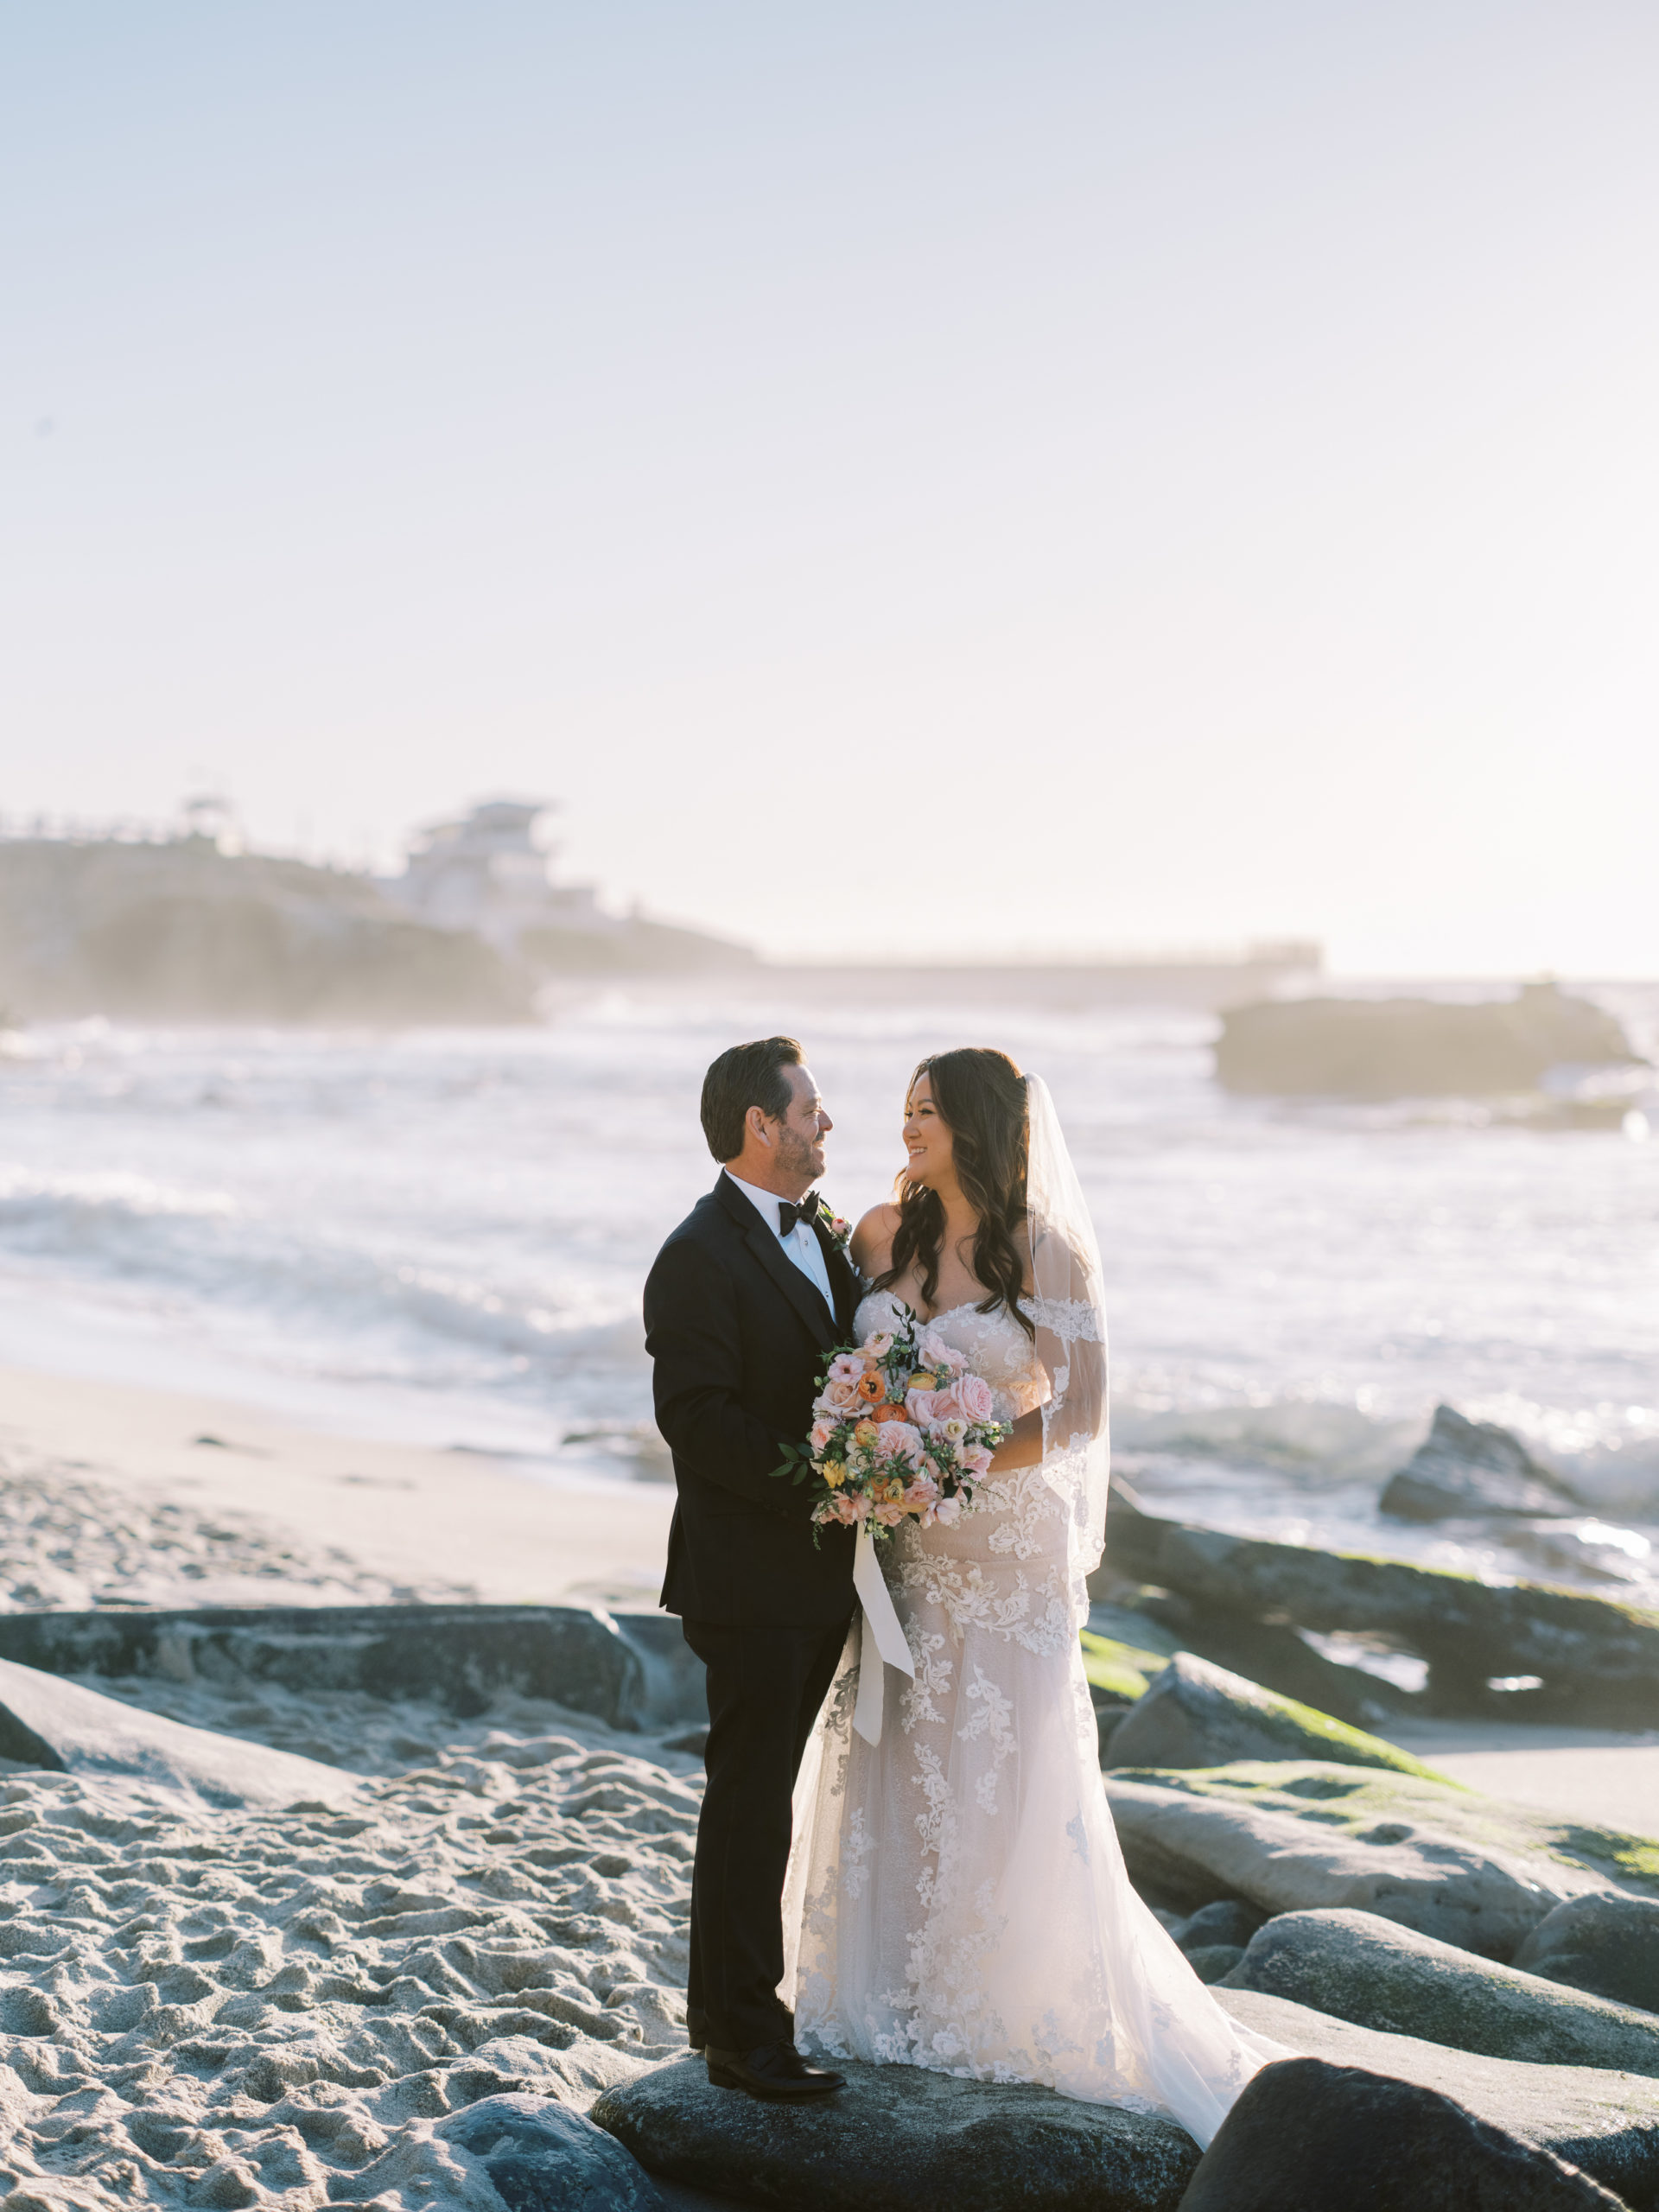 La Jolla wedding day photography by Mirelle Carmichael on beach